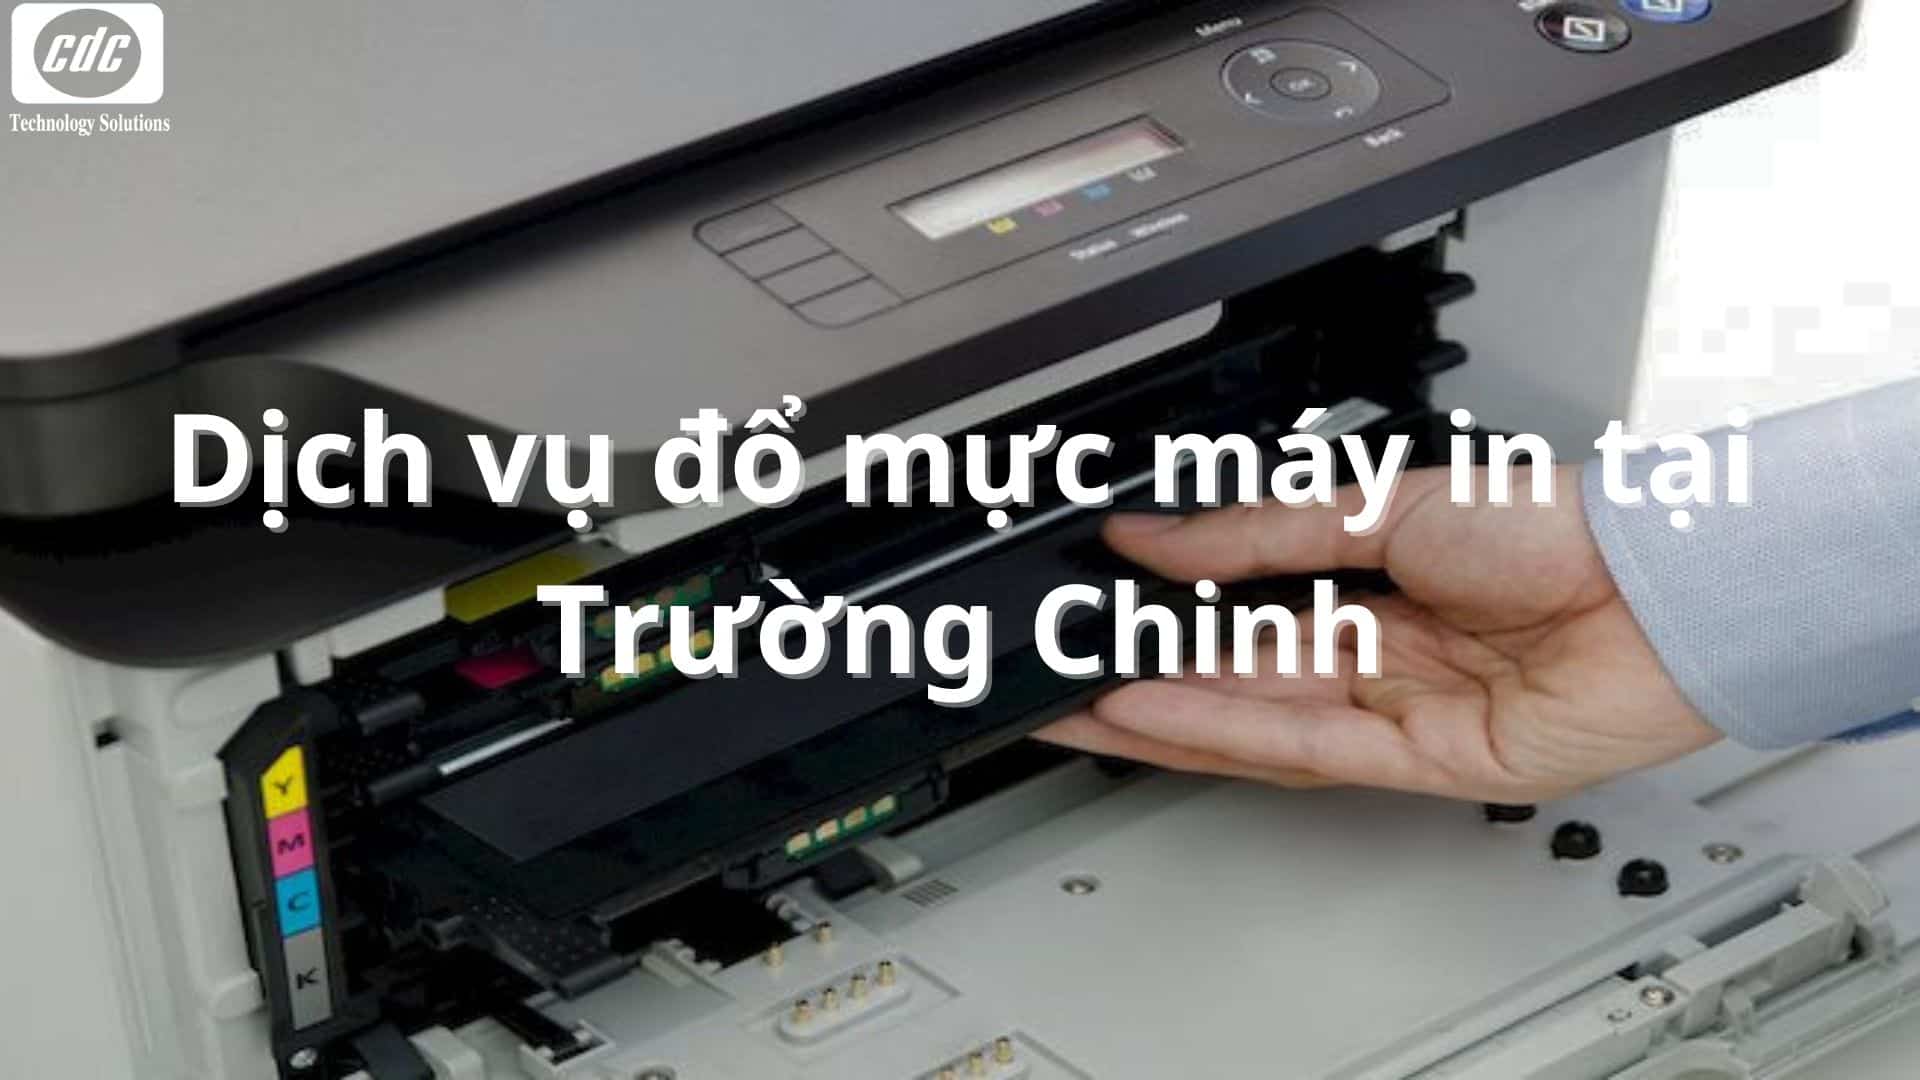 do-muc-may-in-tai-truong-chinh-01